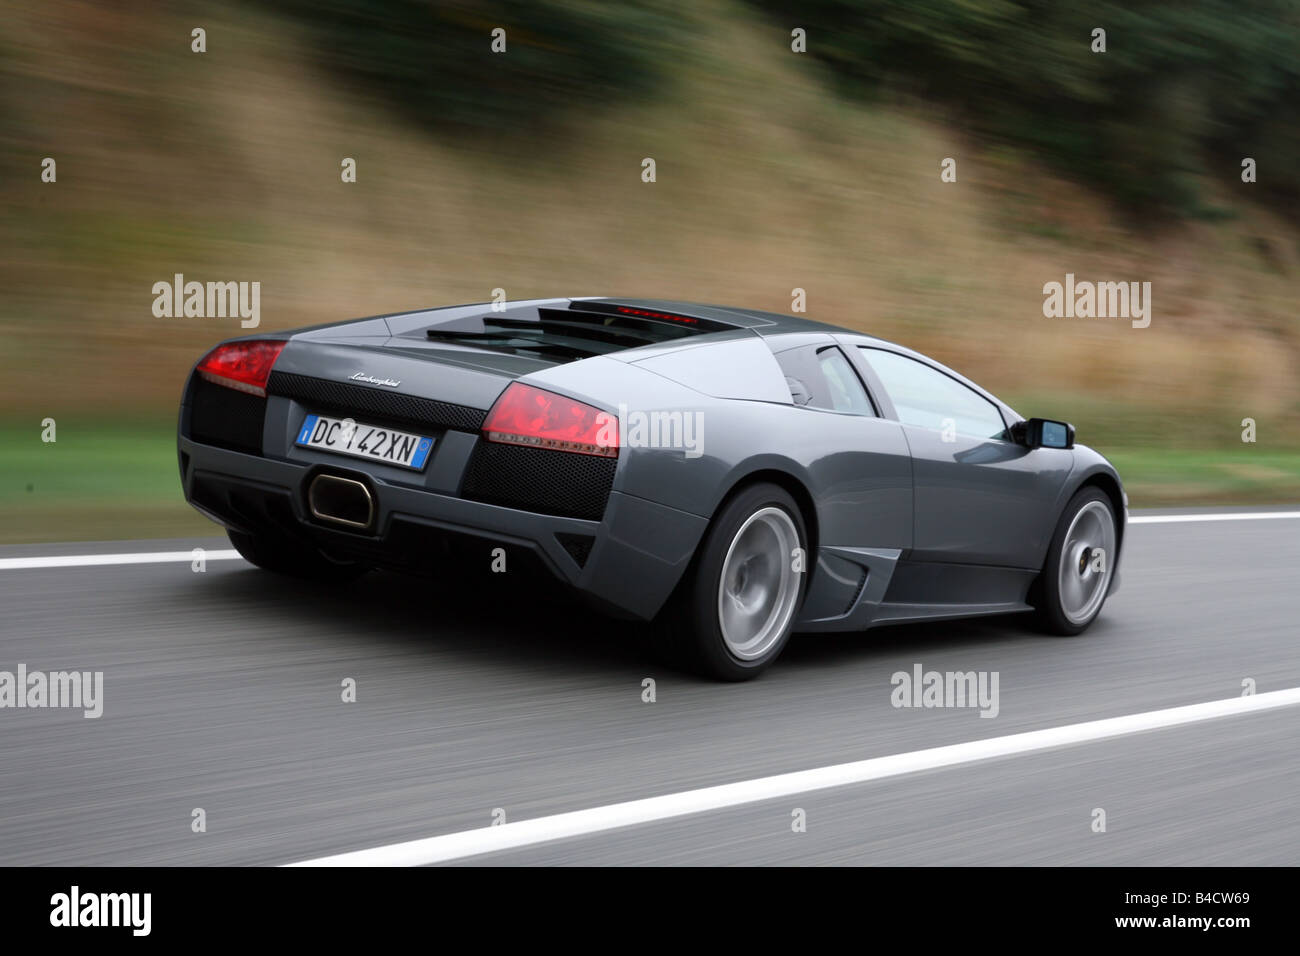 Lamborghini murcielago side hi-res stock photography and images - Alamy